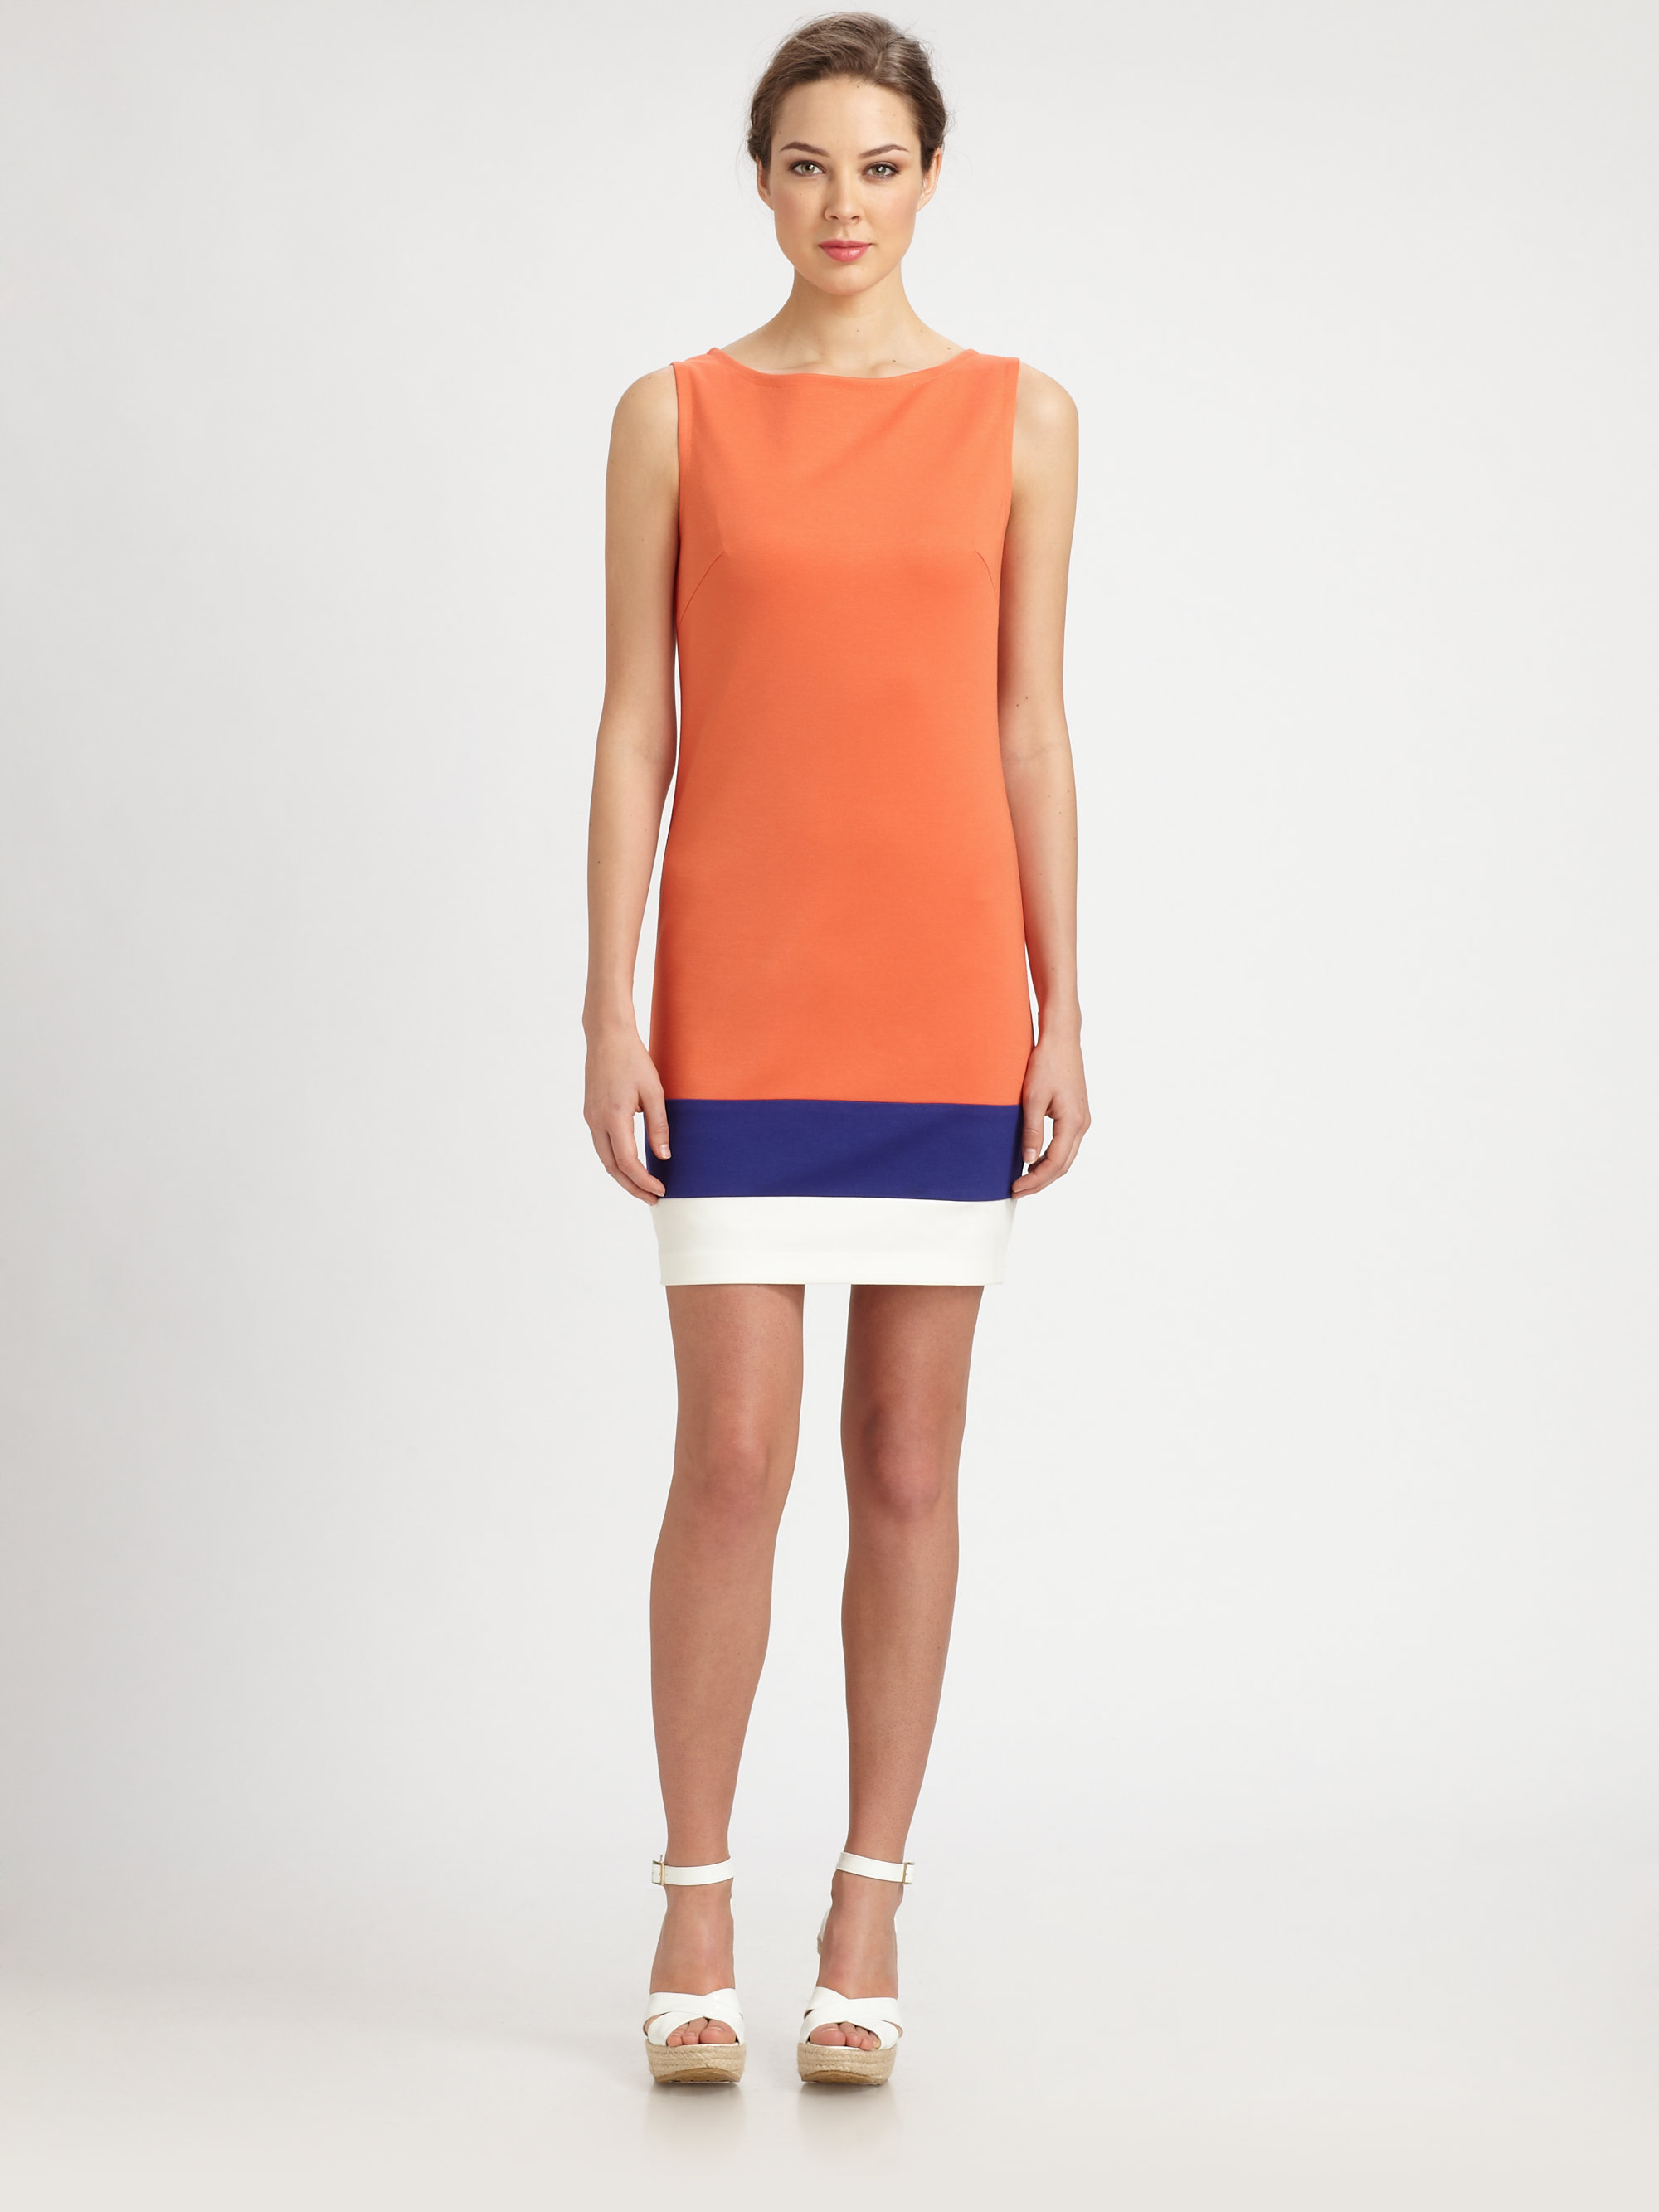 Trina turk Cheer Dress in Orange | Lyst2000 x 2667